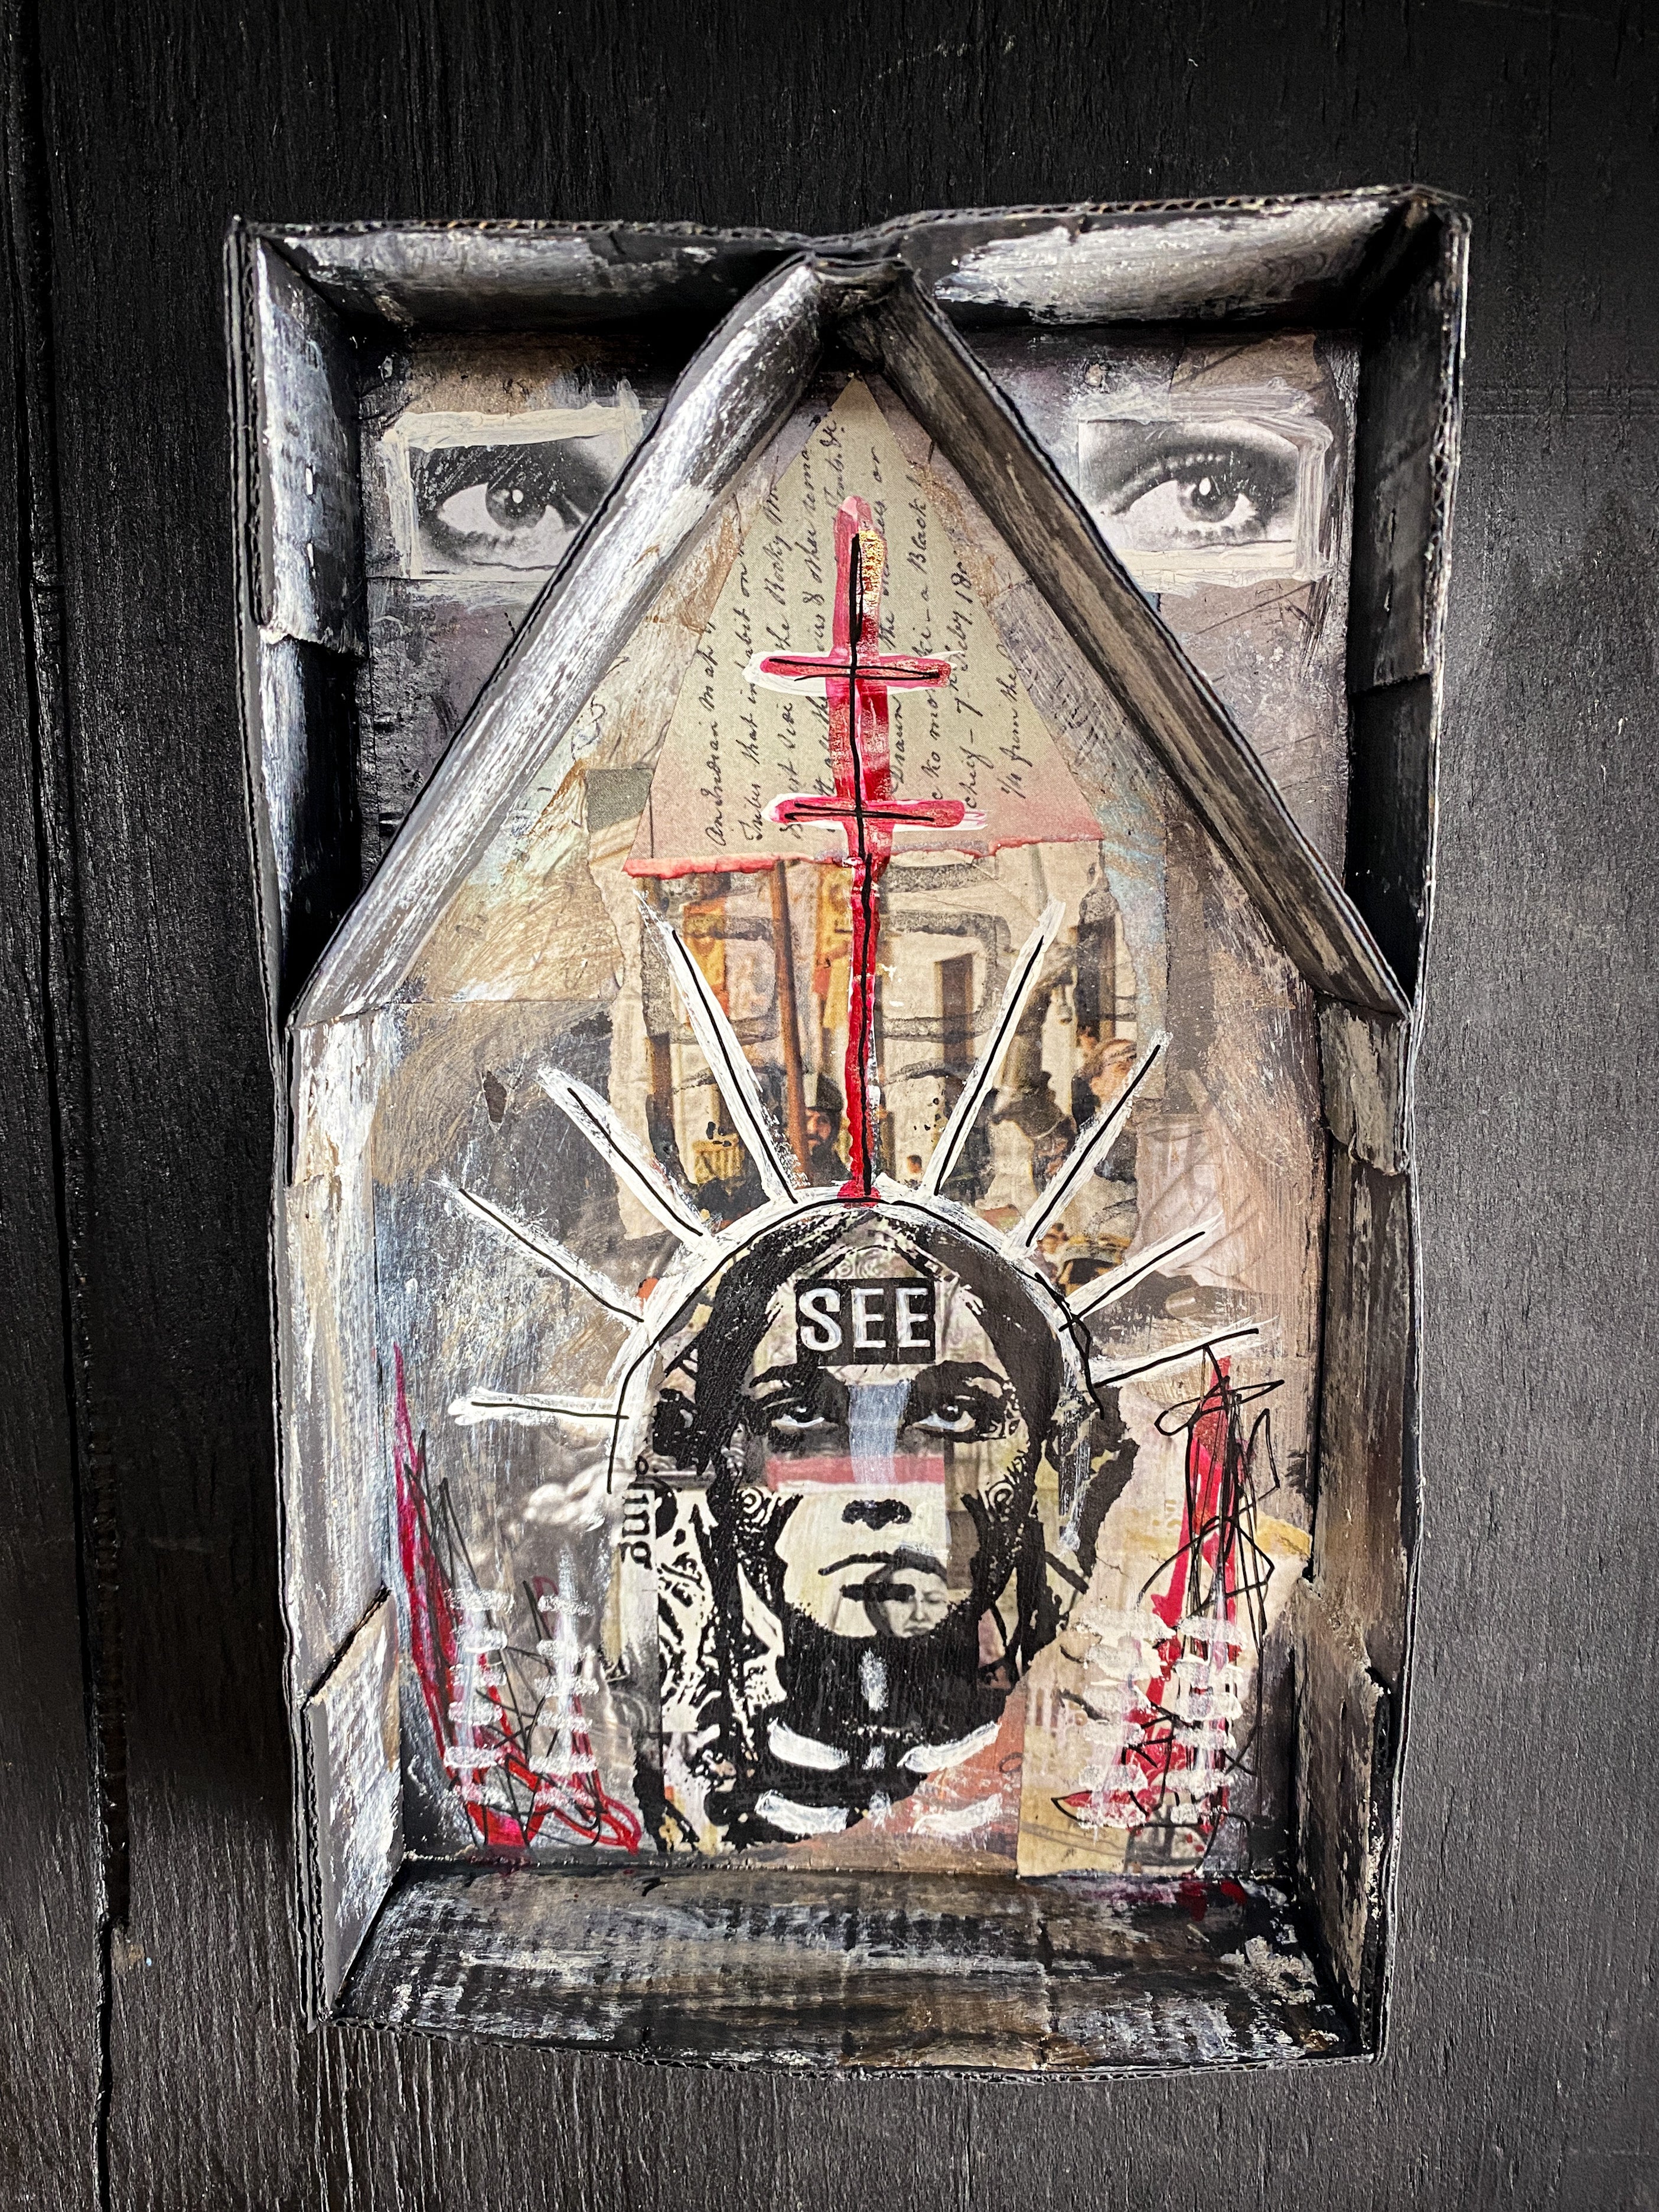 The Seer - Original Mixed Media Shrine - Collage Assemblage Art